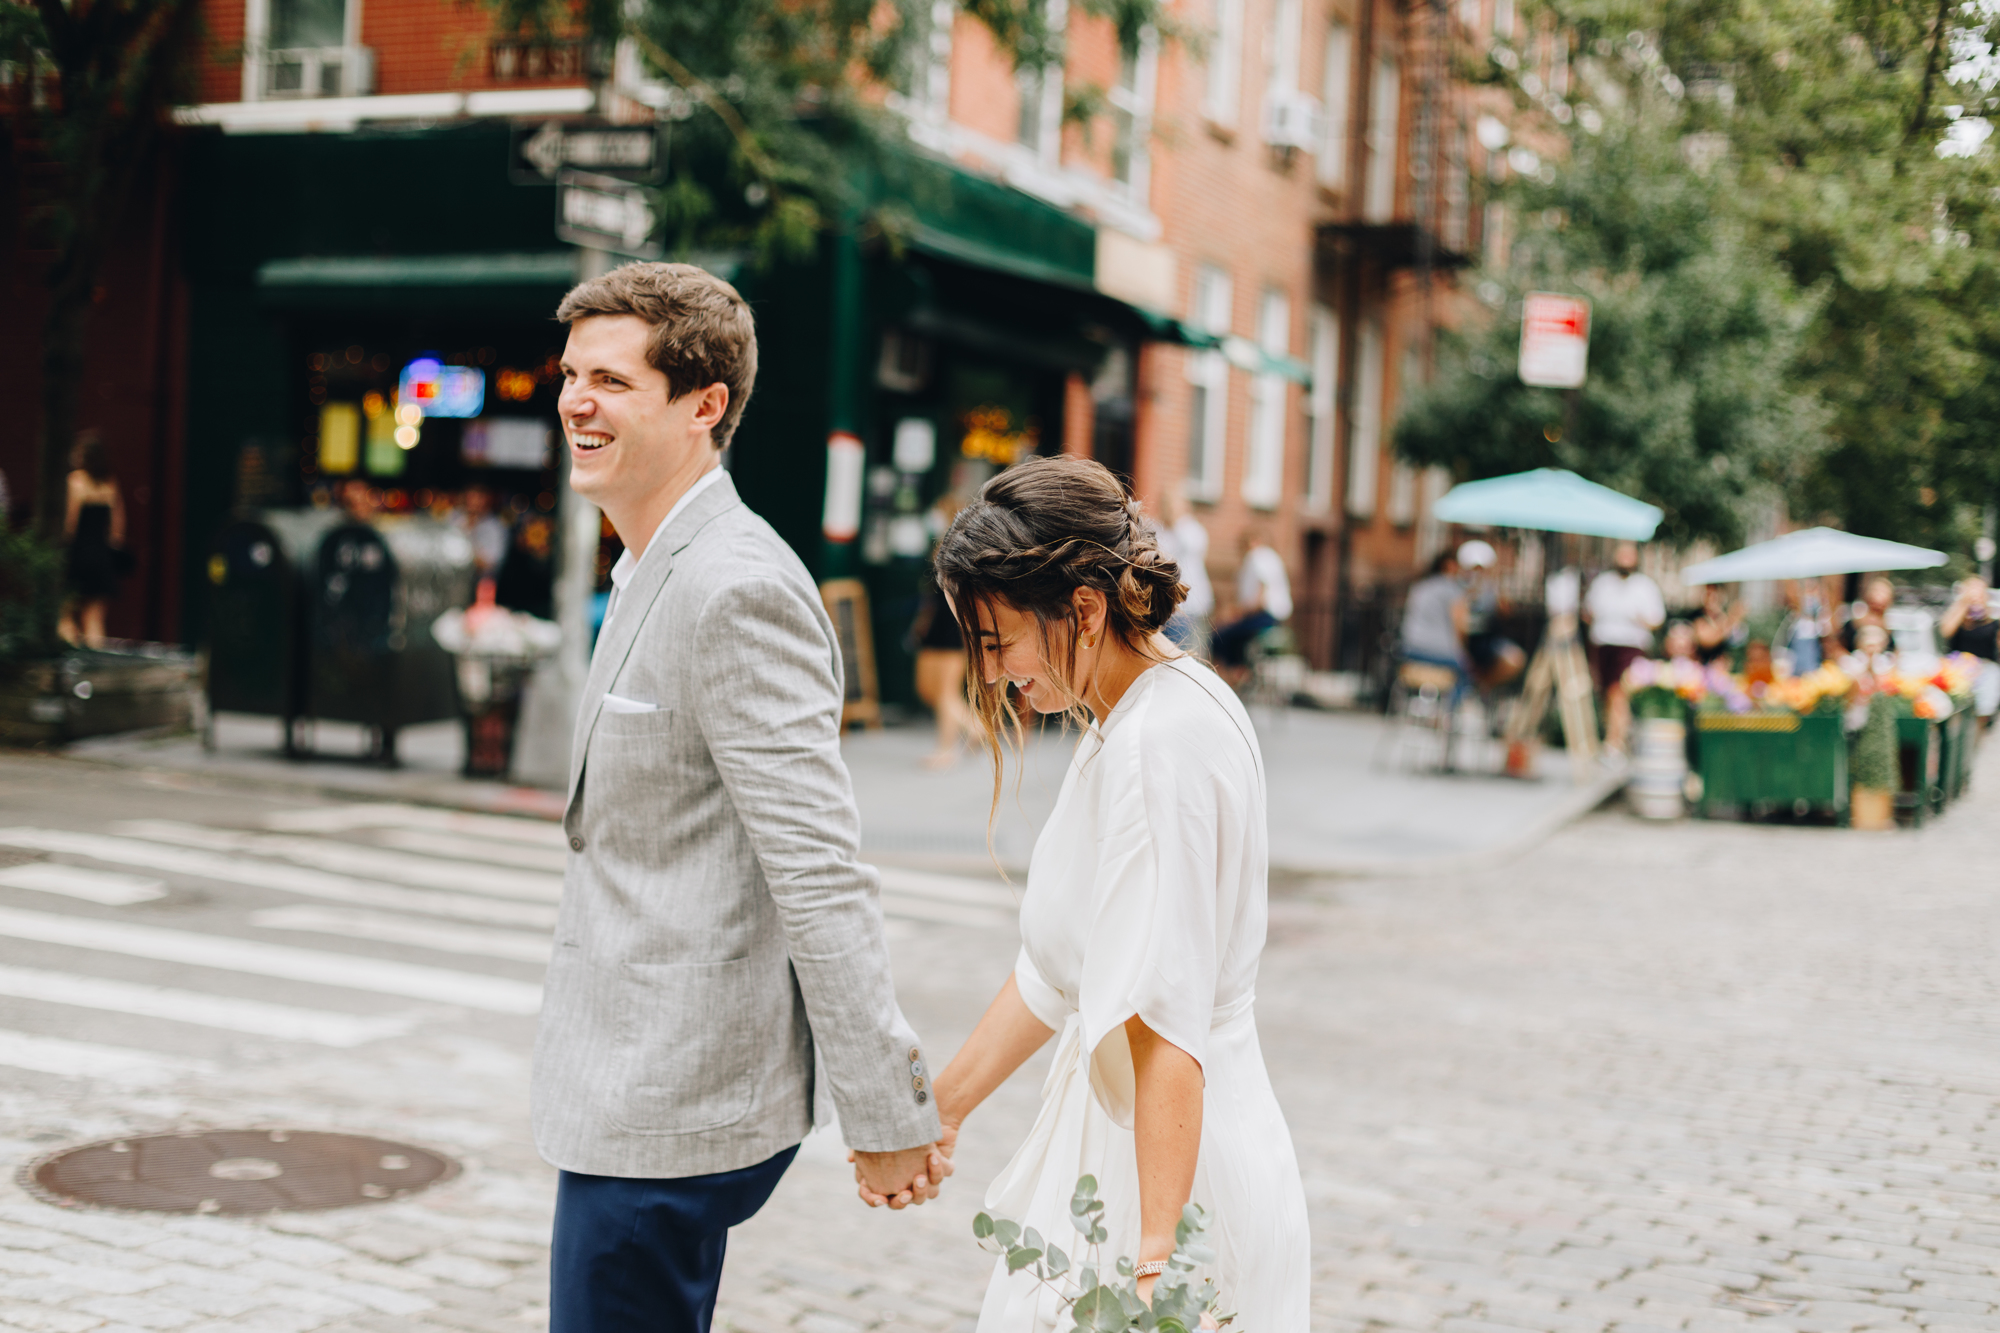 Micro wedding candid photos in New York City